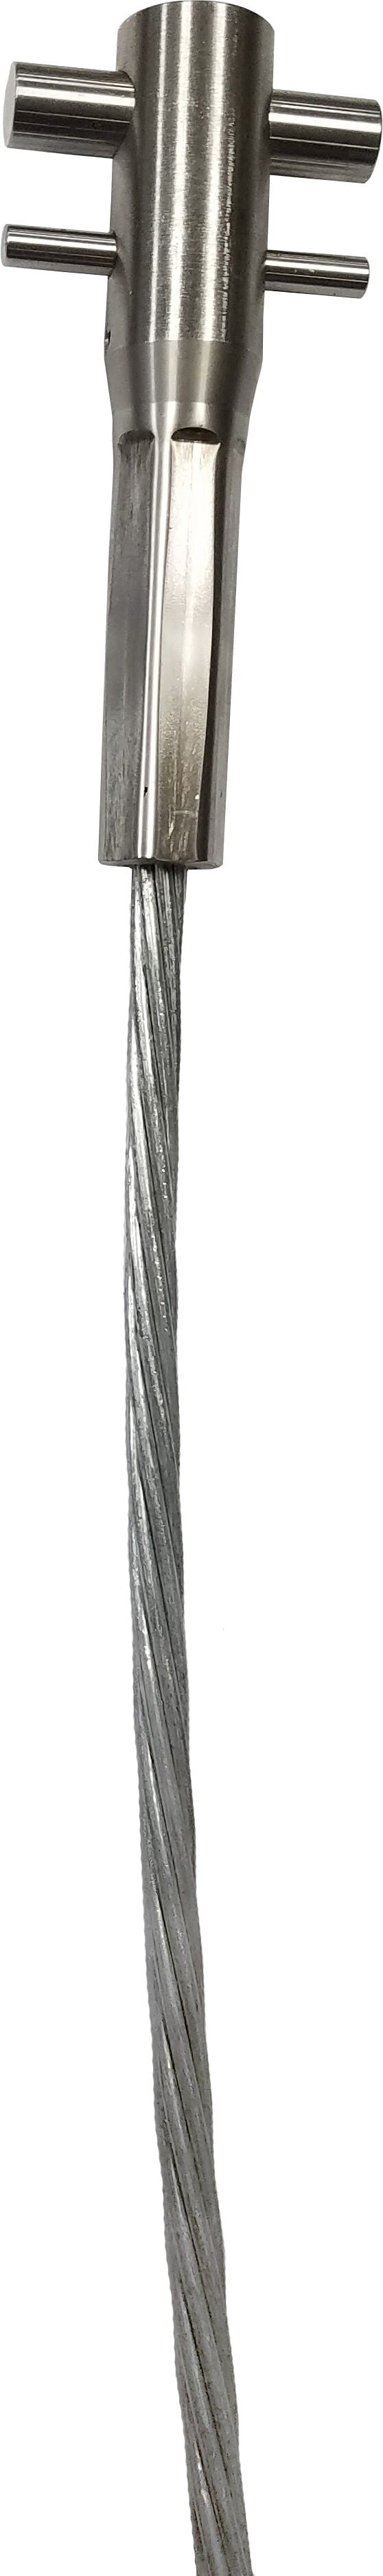 3M™ DBI-SALA® Lad-Saf™ Swaged Cable 6115018, 3/8 Inch, Galvanized Steel, 25 m_0